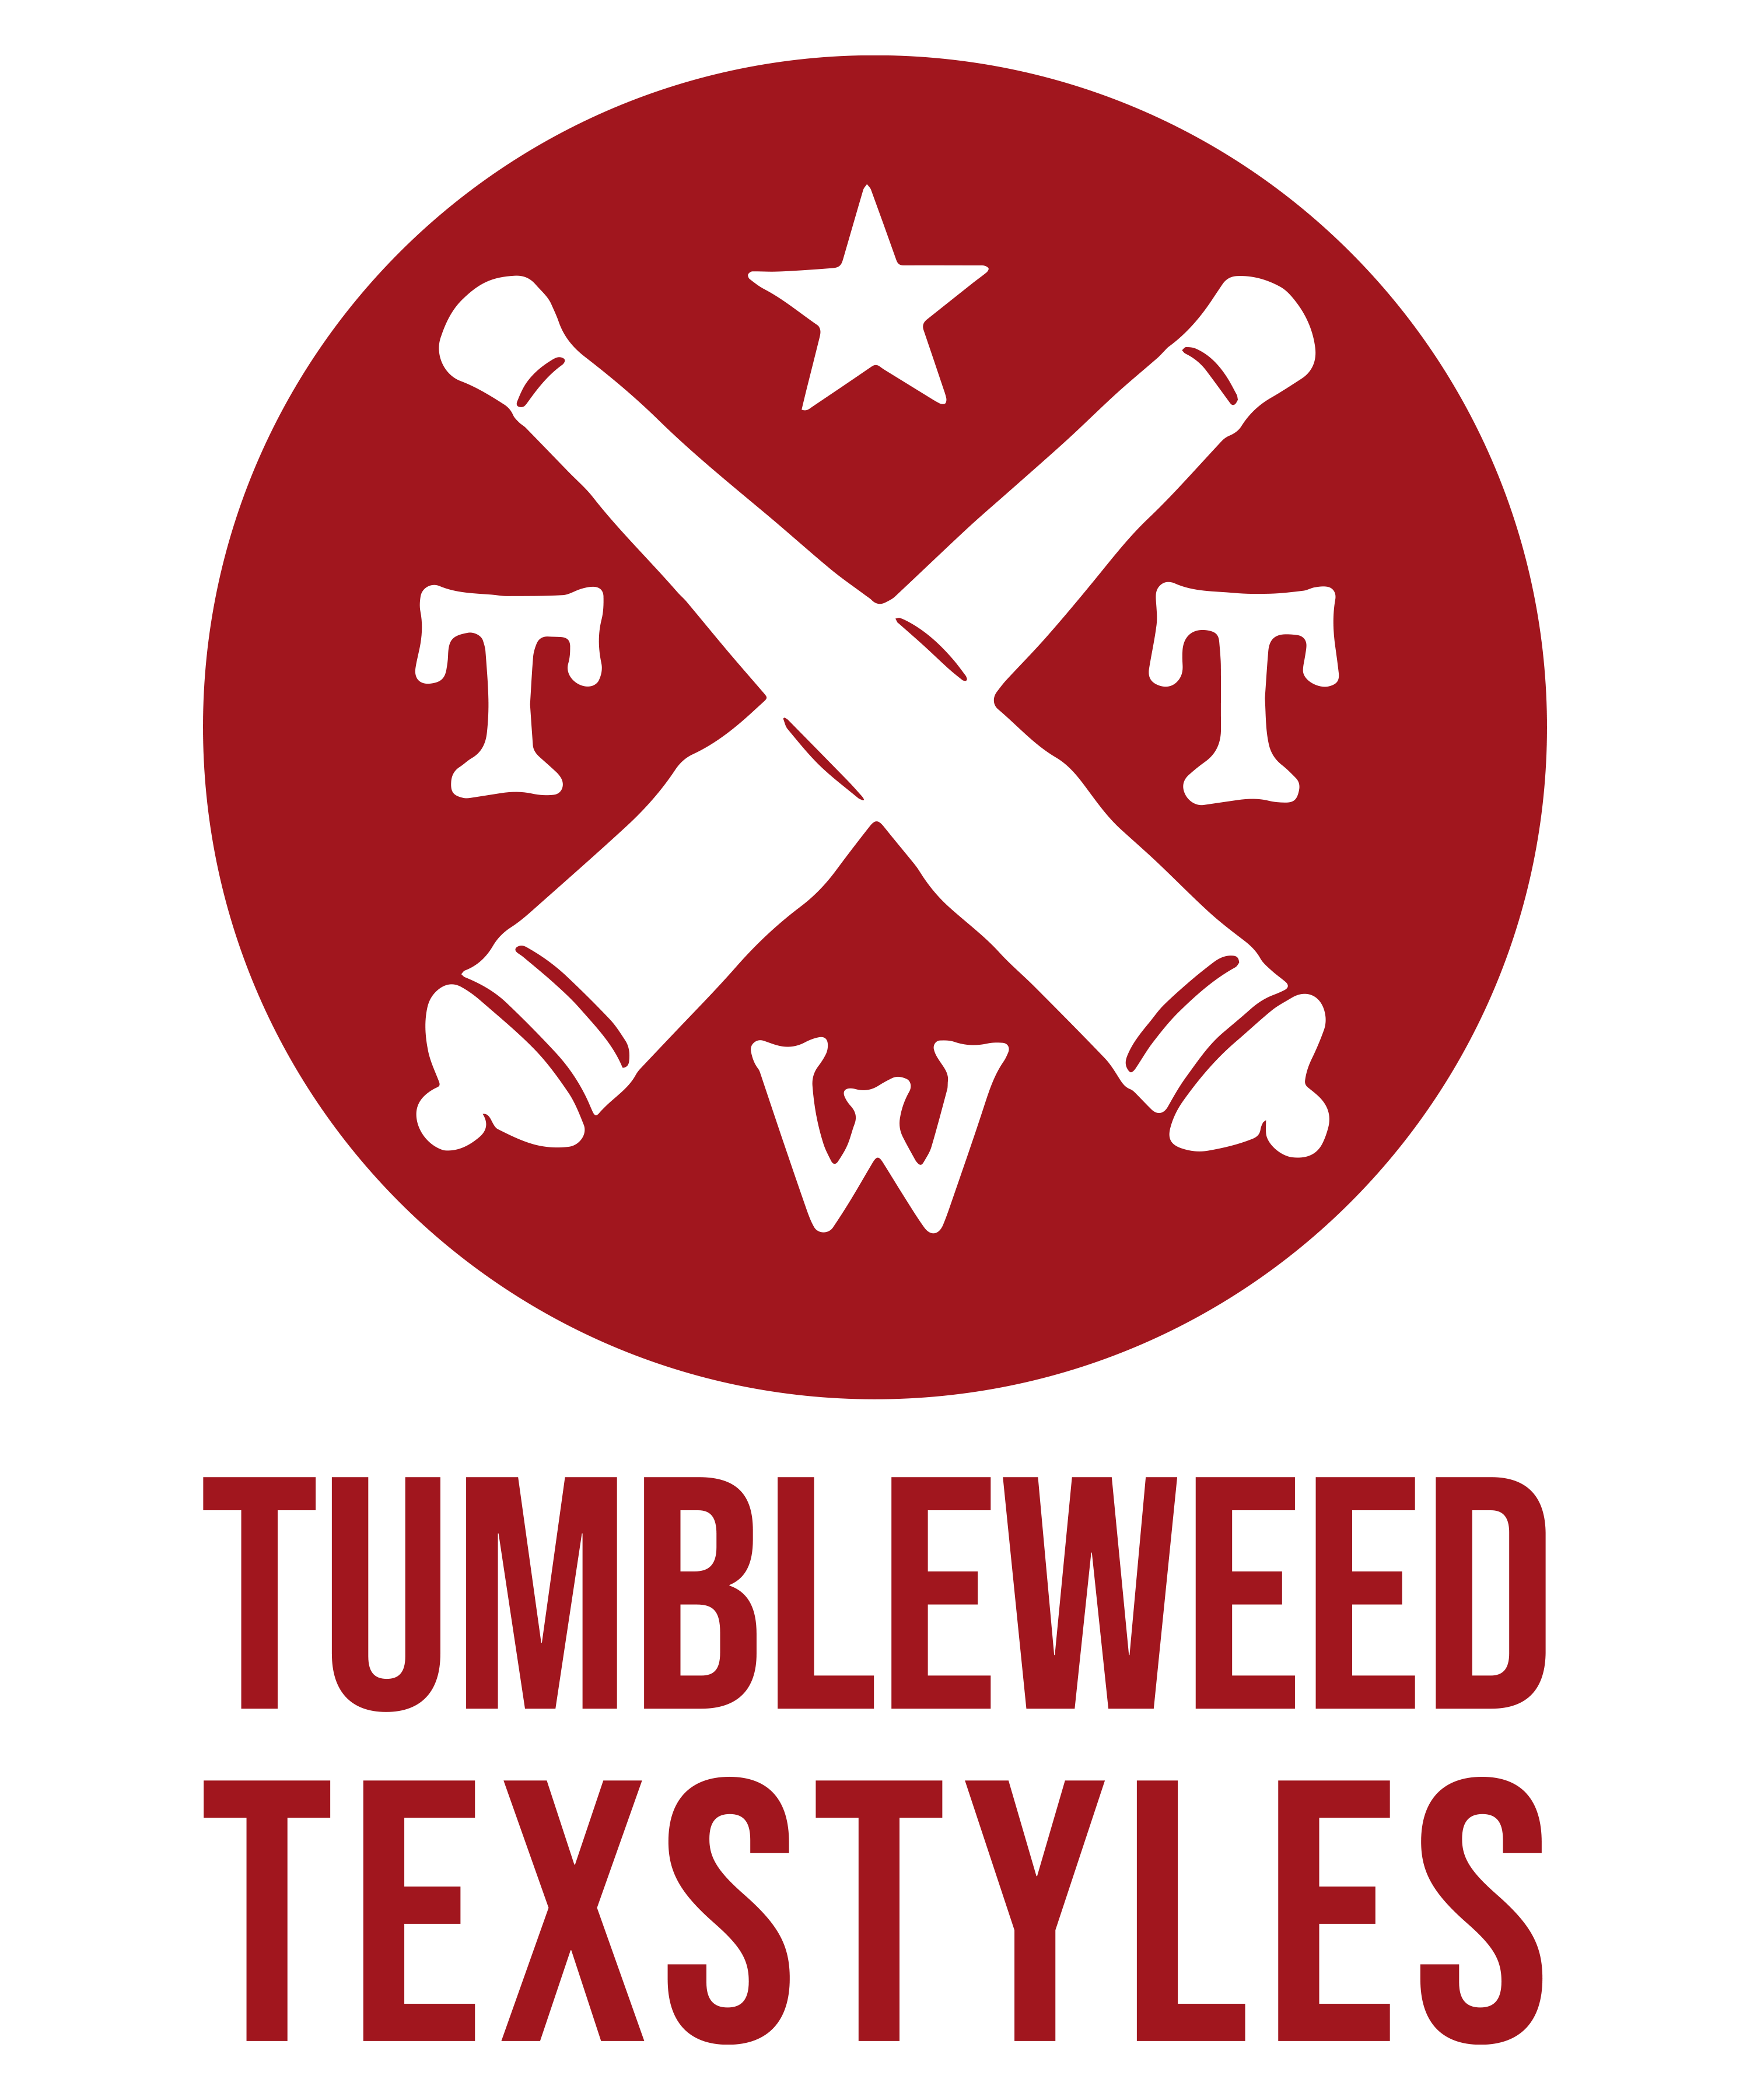 tumbleweed logo